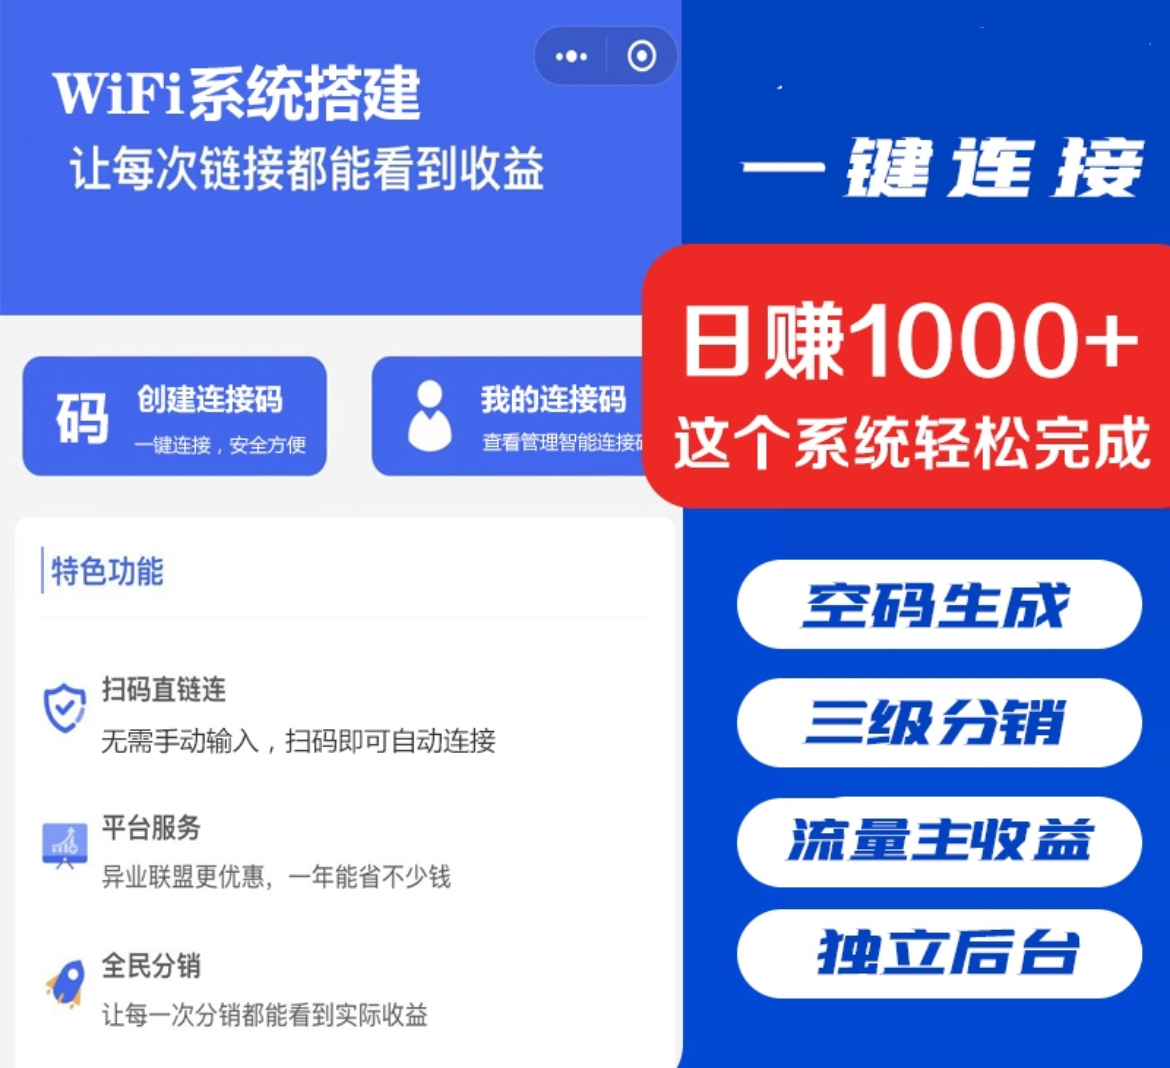 WiFi营销小程序共享WiFi门店一键免密码连接WiFi流量主分销小程序-知者网